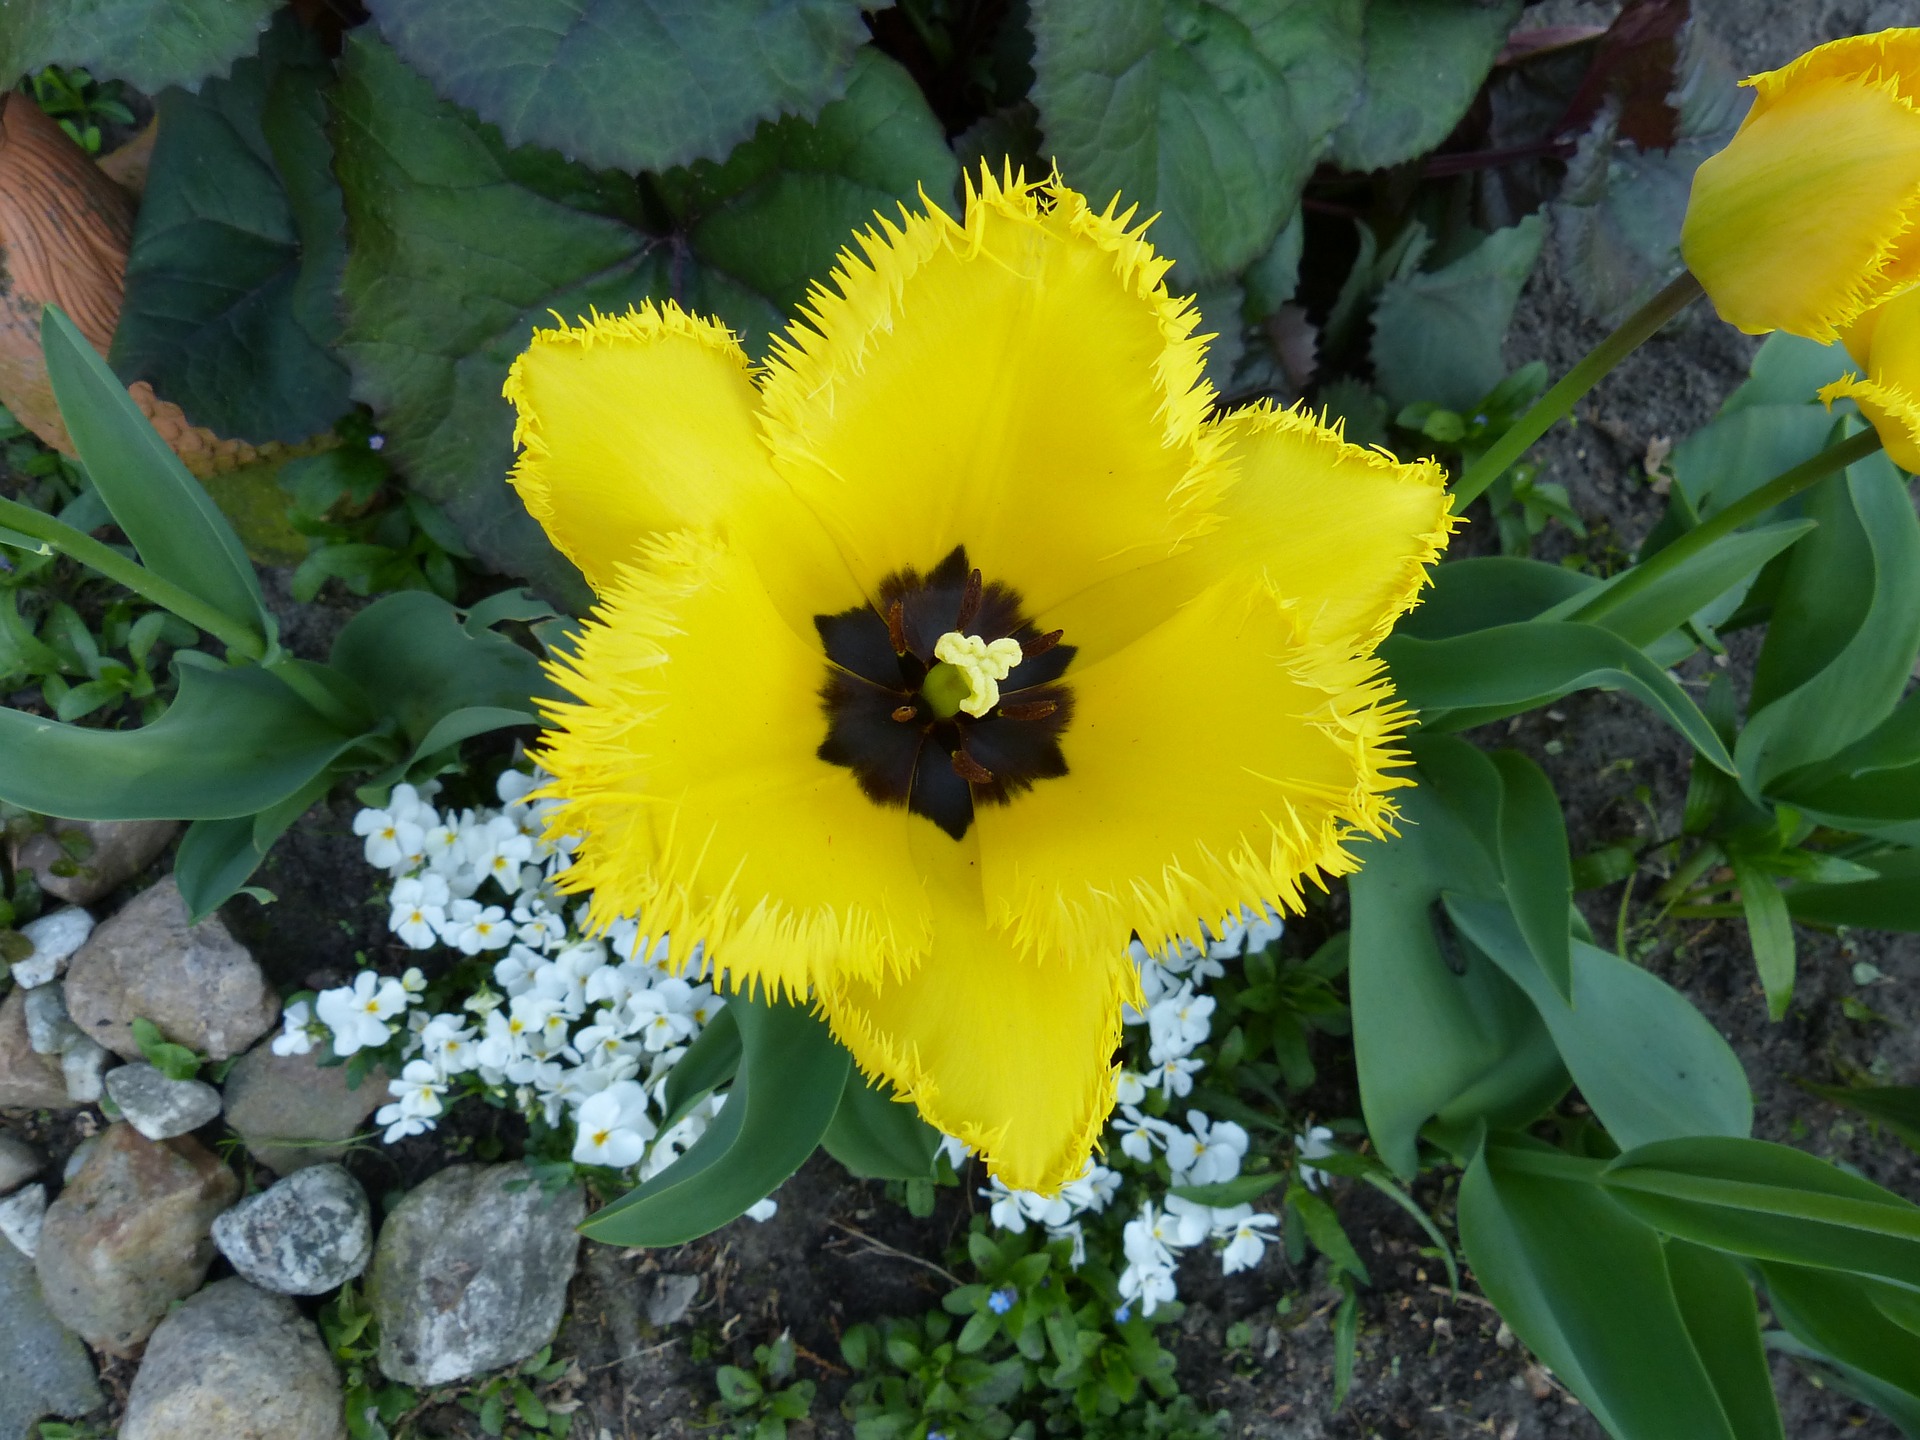 Yellow Tulip in a Garden